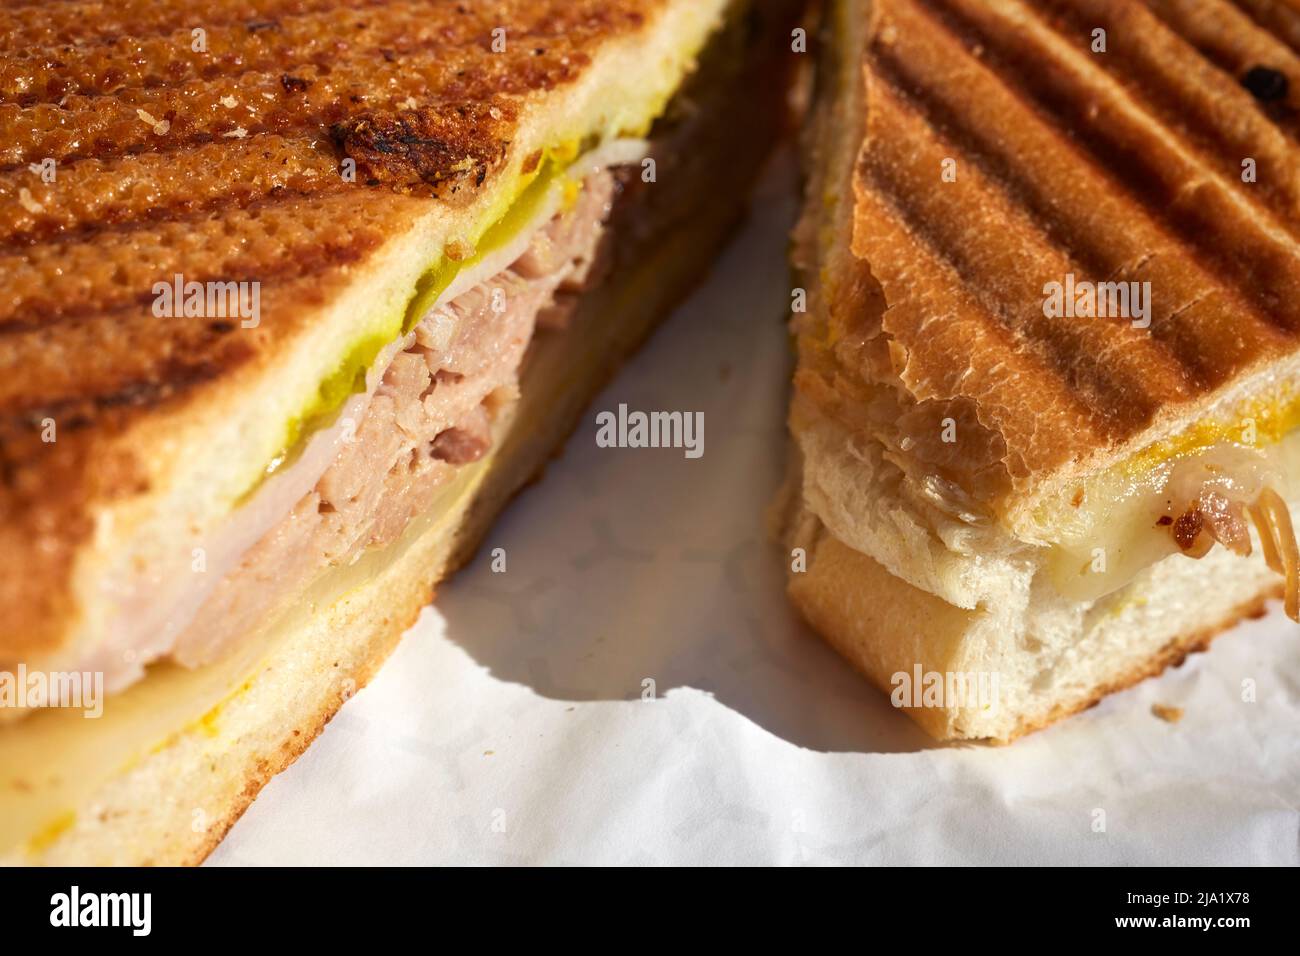 A classic Cuban Sandwich served in Pennsylvania, USA Stock Photo